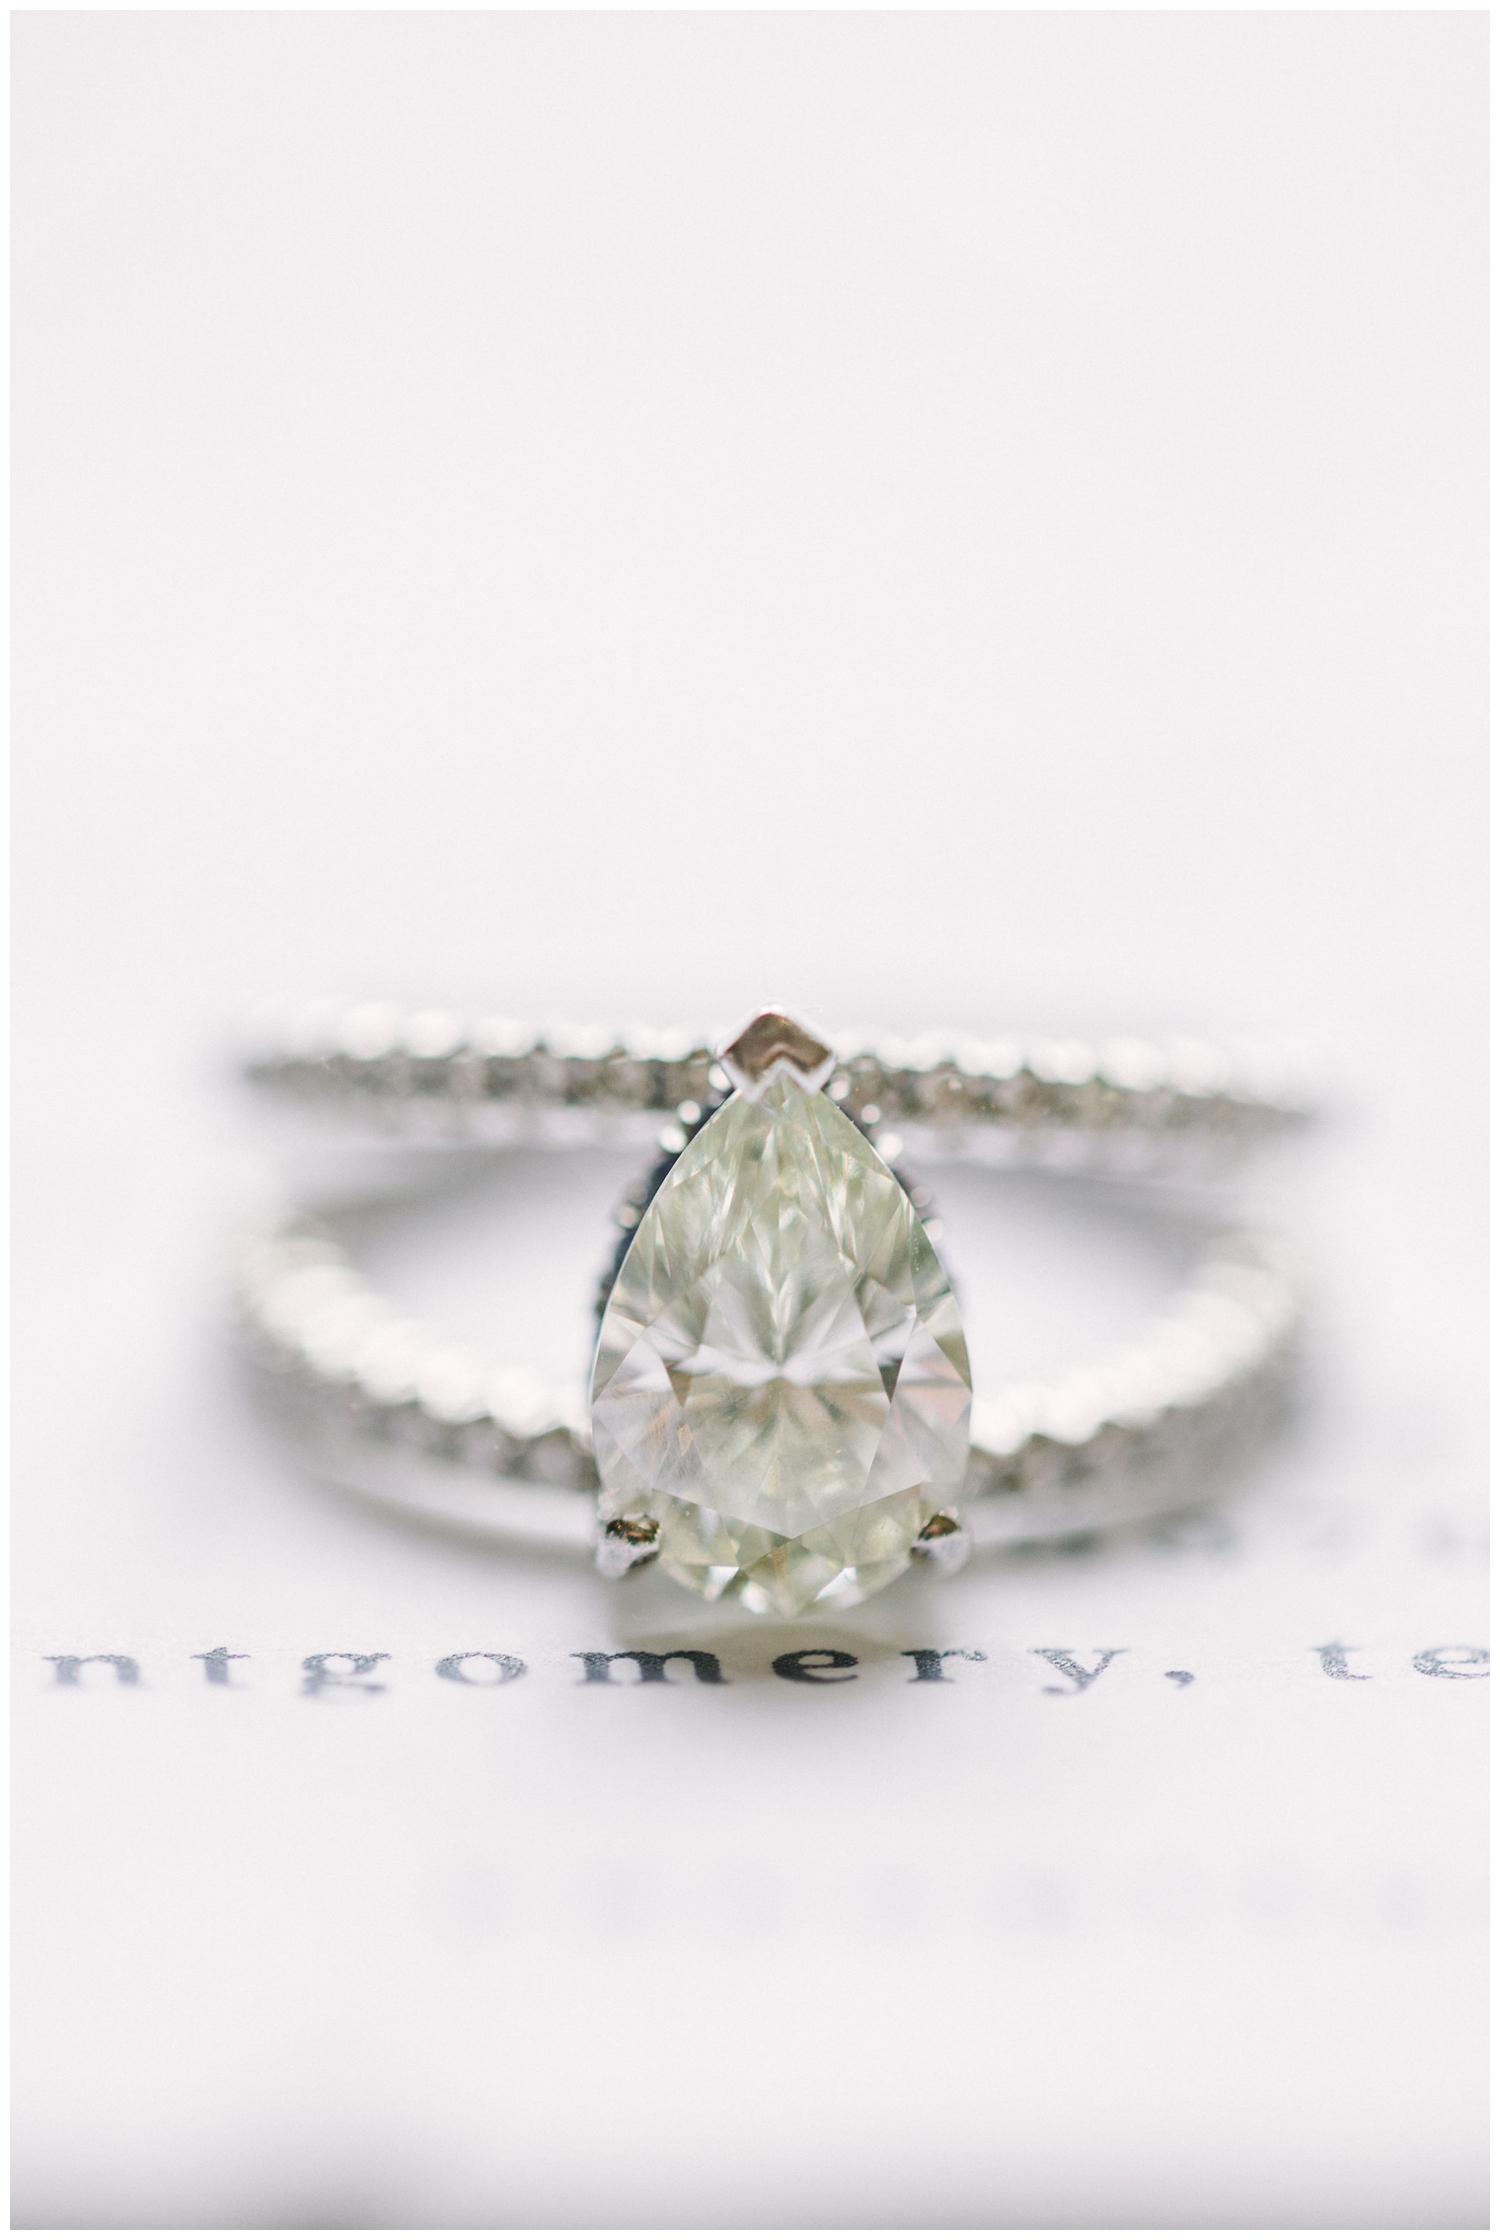 teardrop diamond ring on white invitation